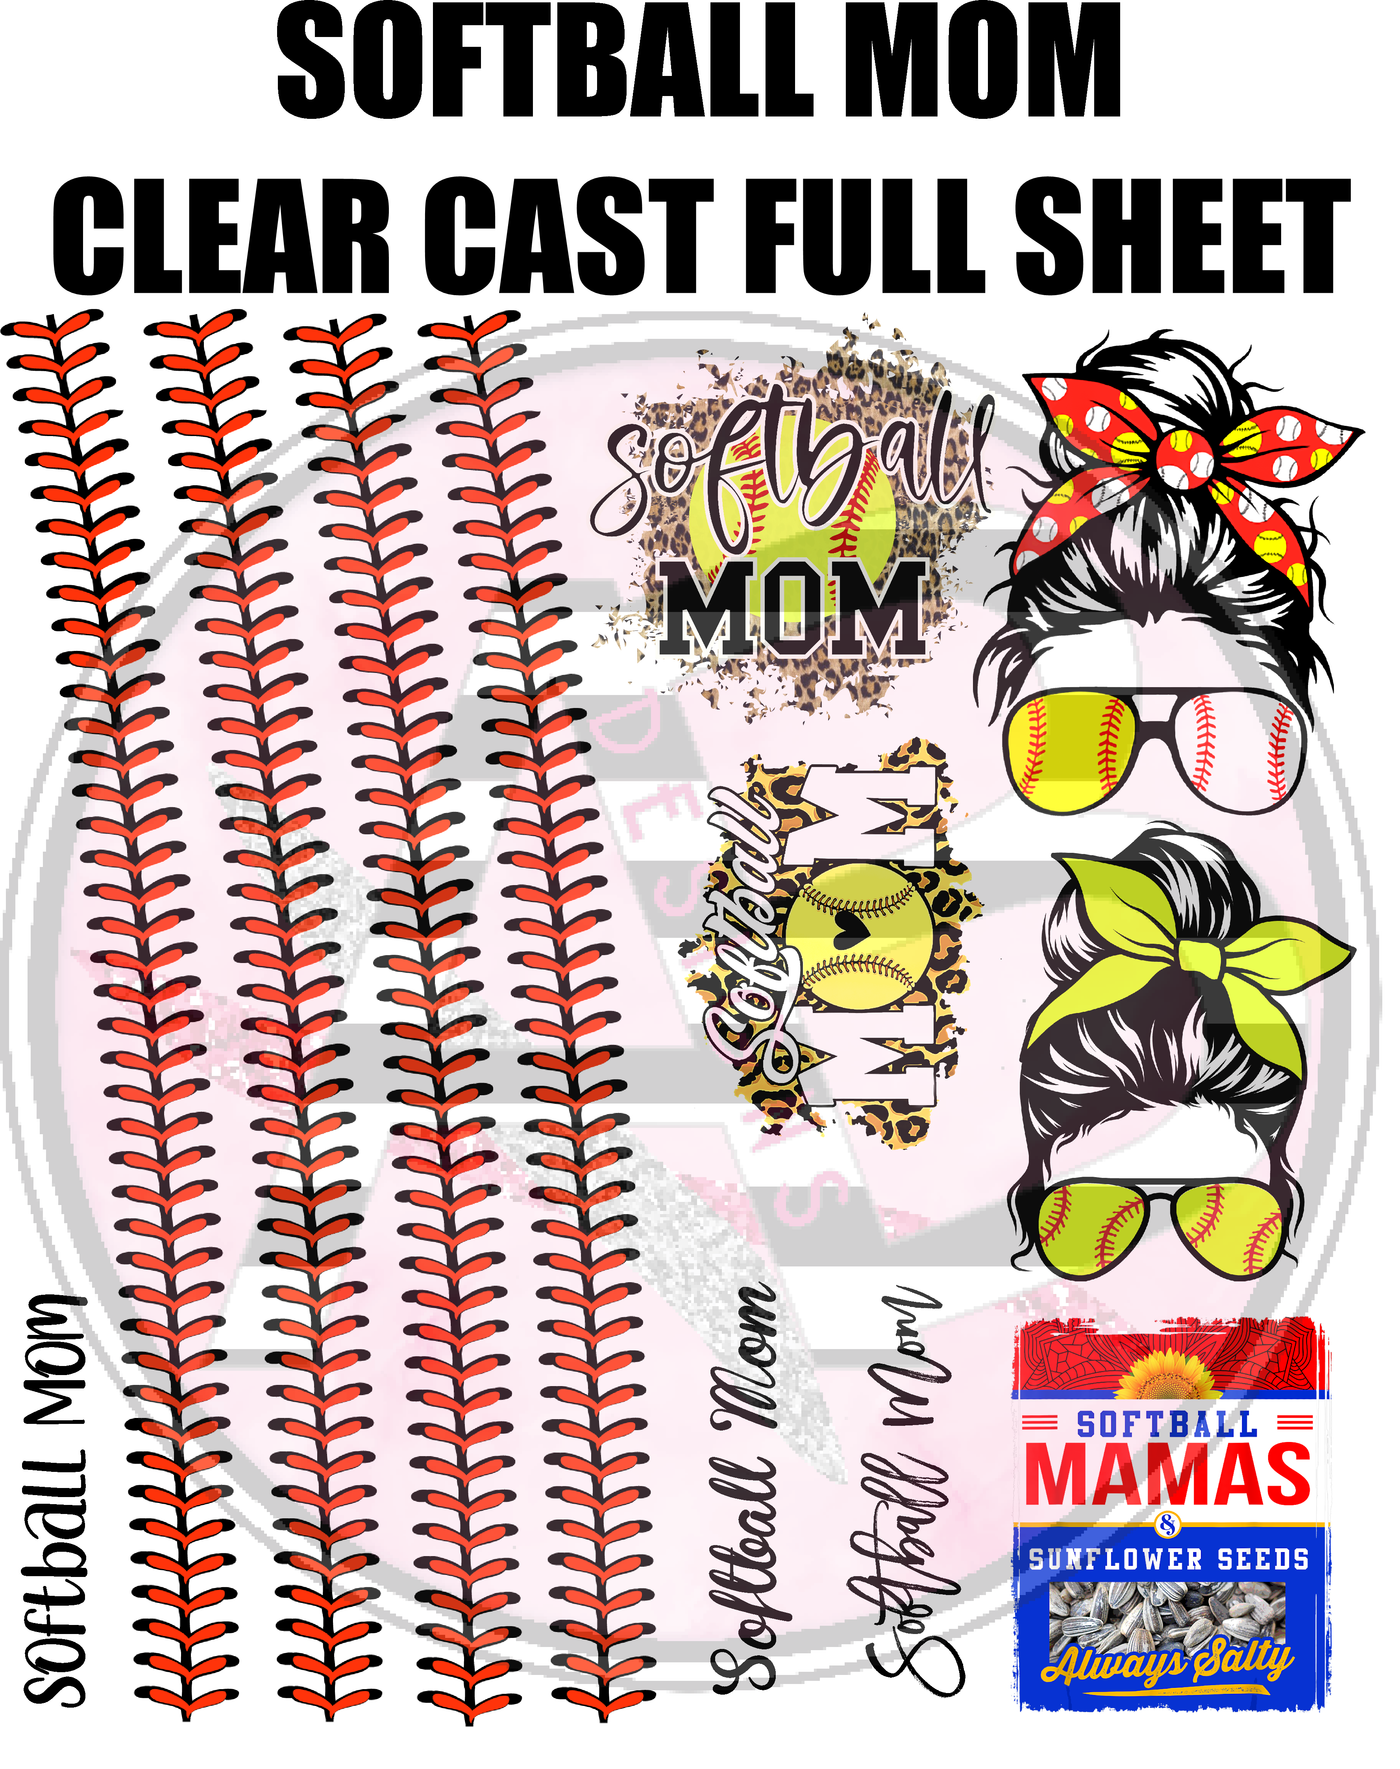 Softball Mom 01 Full Sheet 12x12 Clear Cast Decal